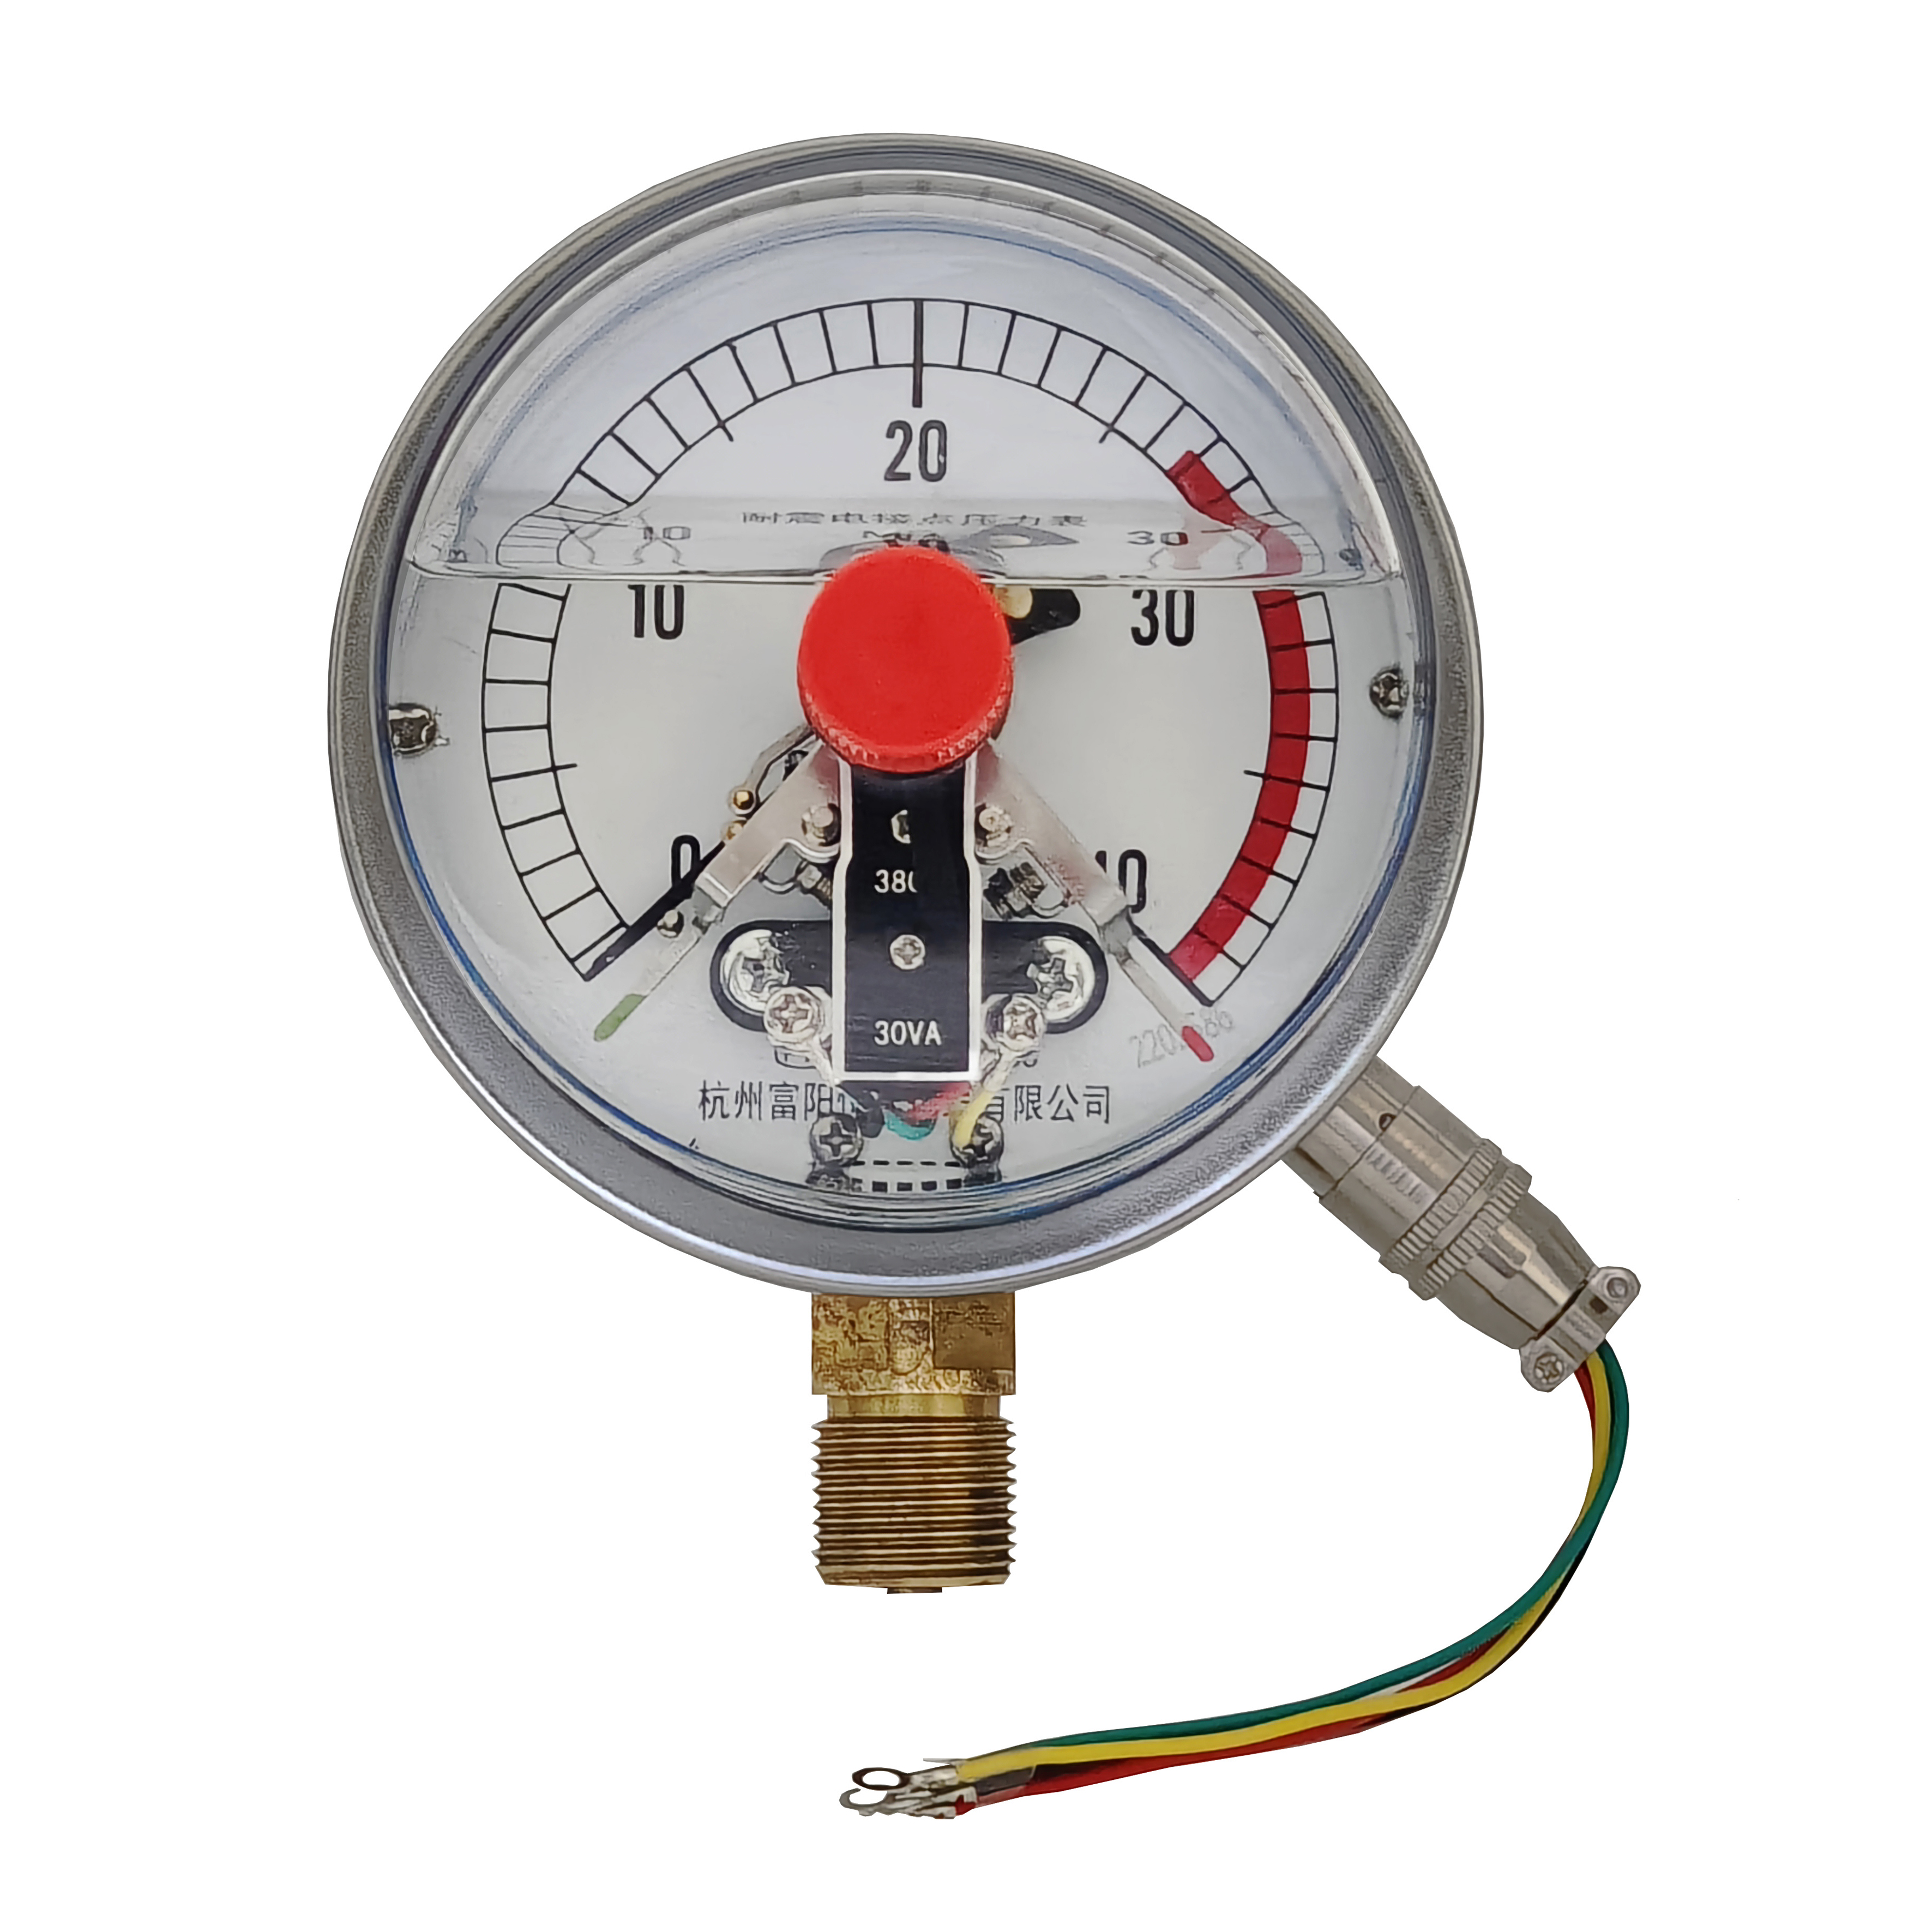 YNXC100 shock-proof electric contact pressure gauge